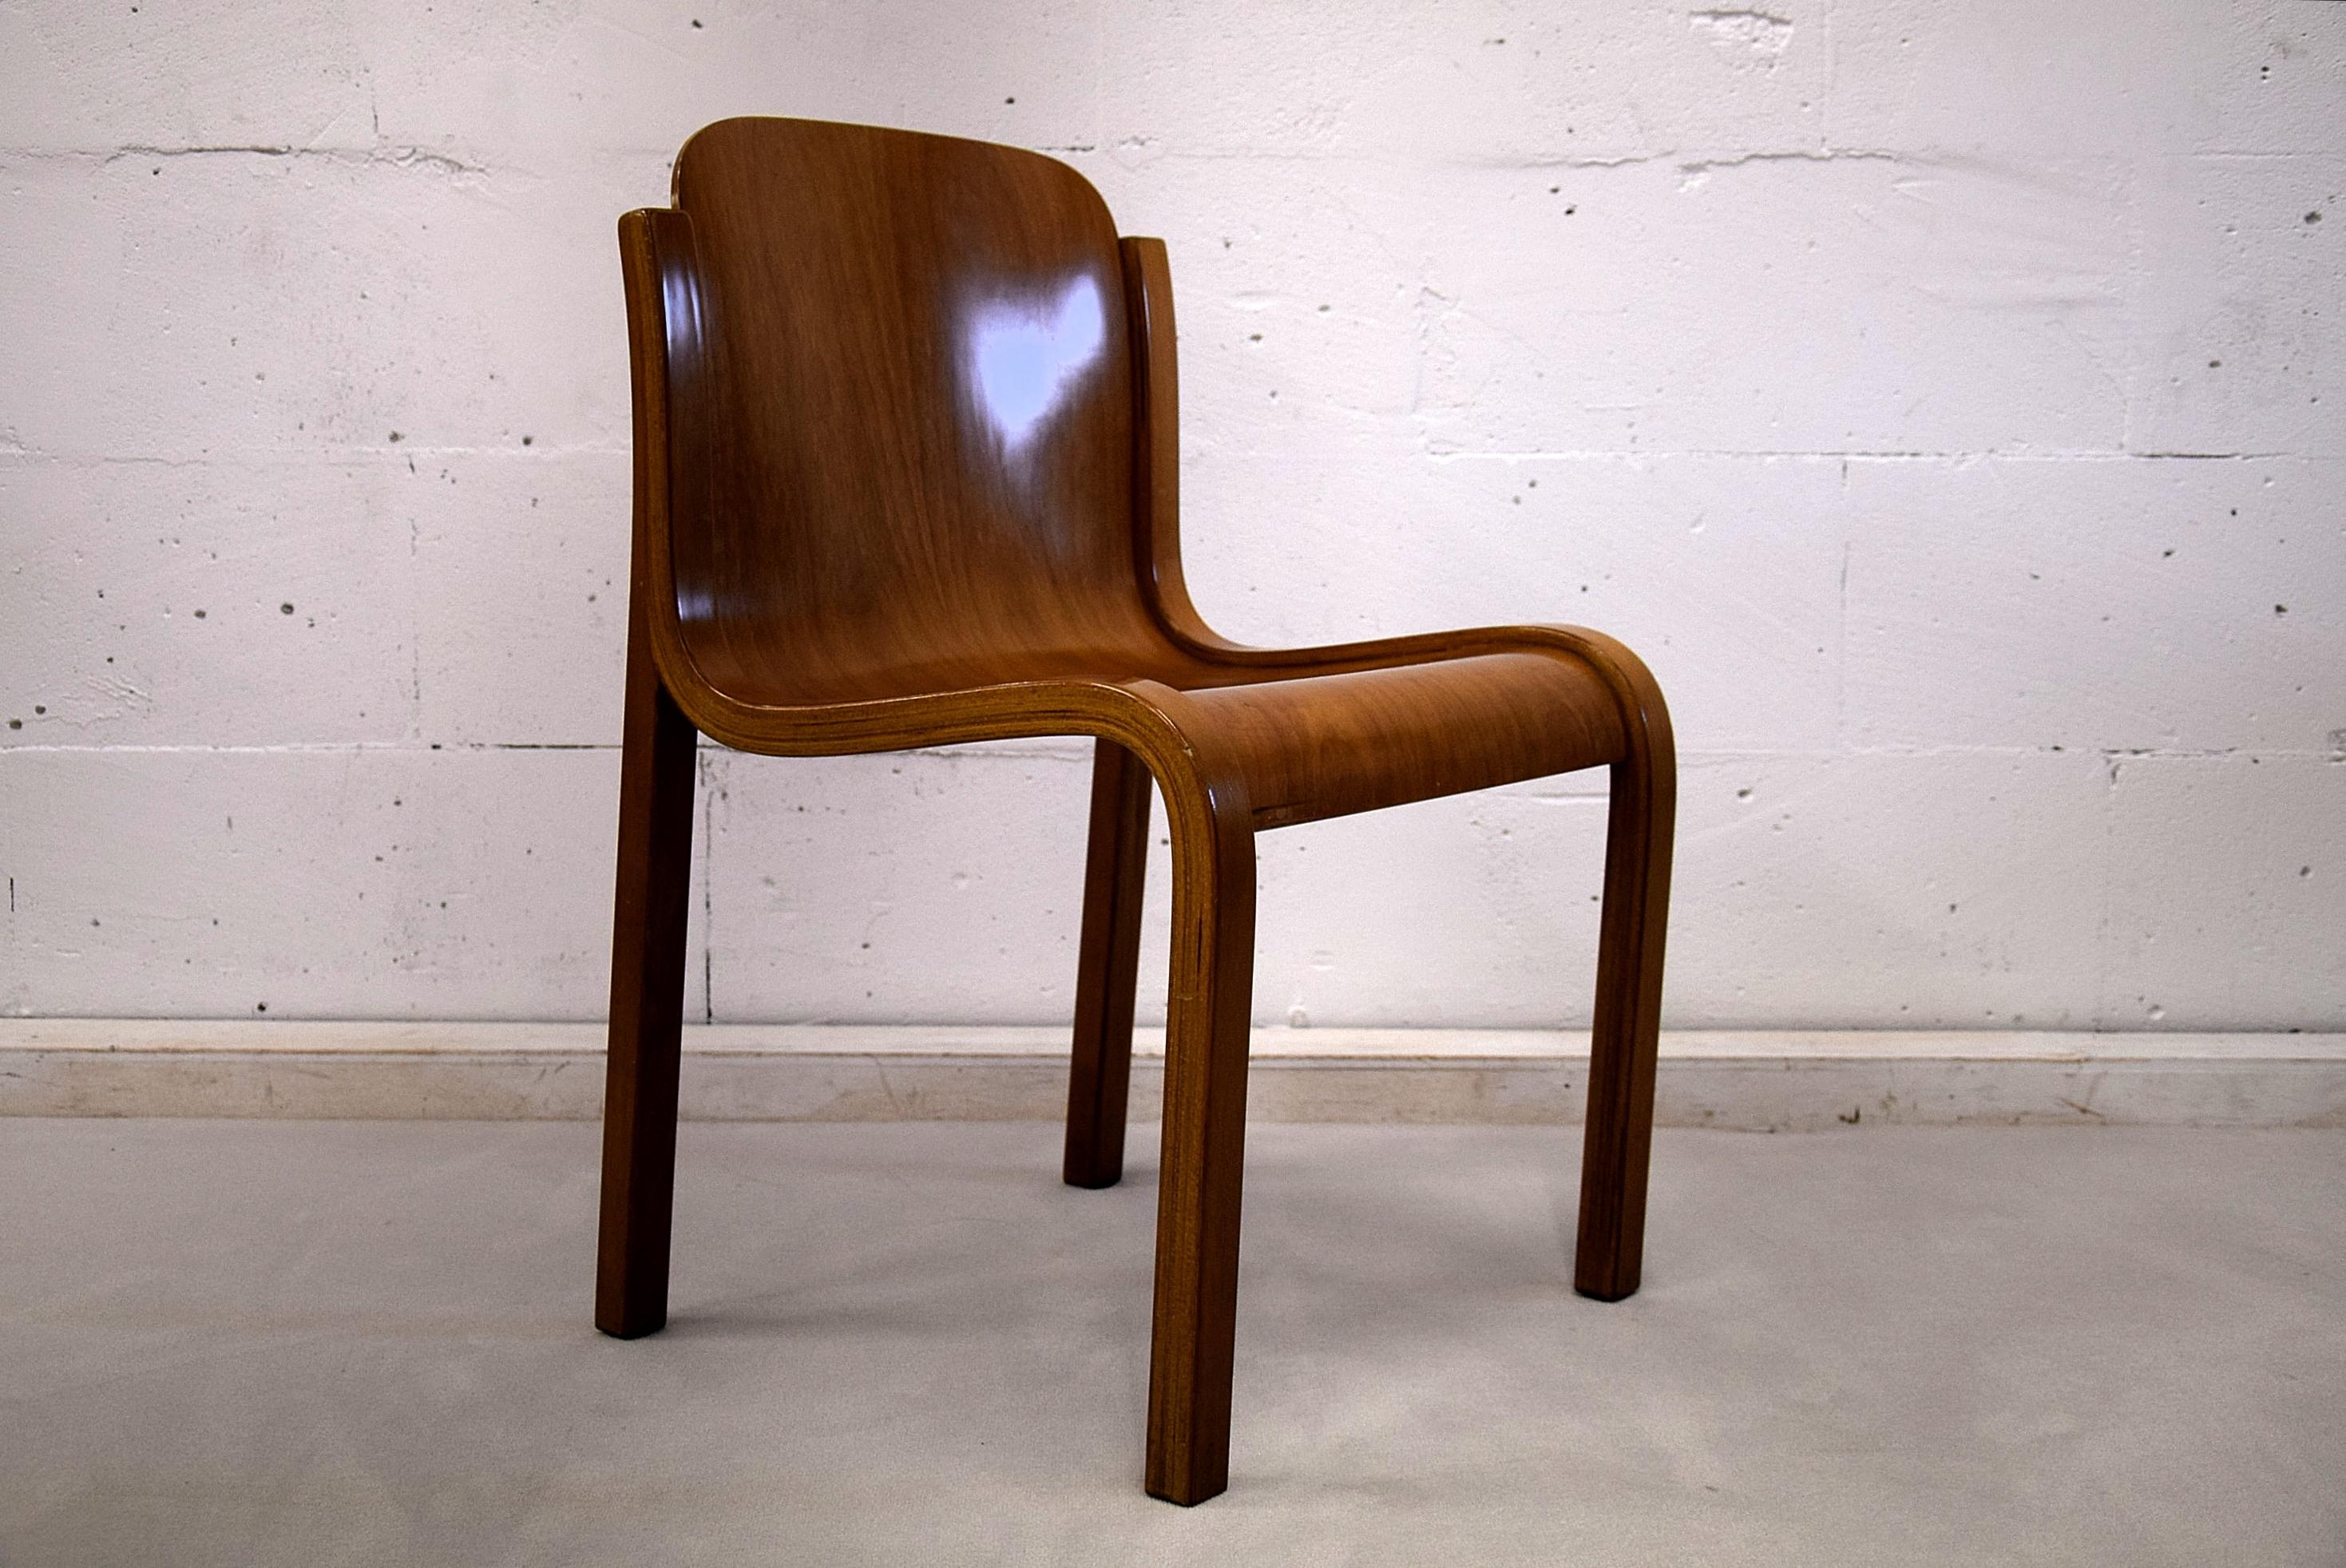 Italian Mid-Century Modern Curved Plywood Chairs by Carlo Bartoli 1